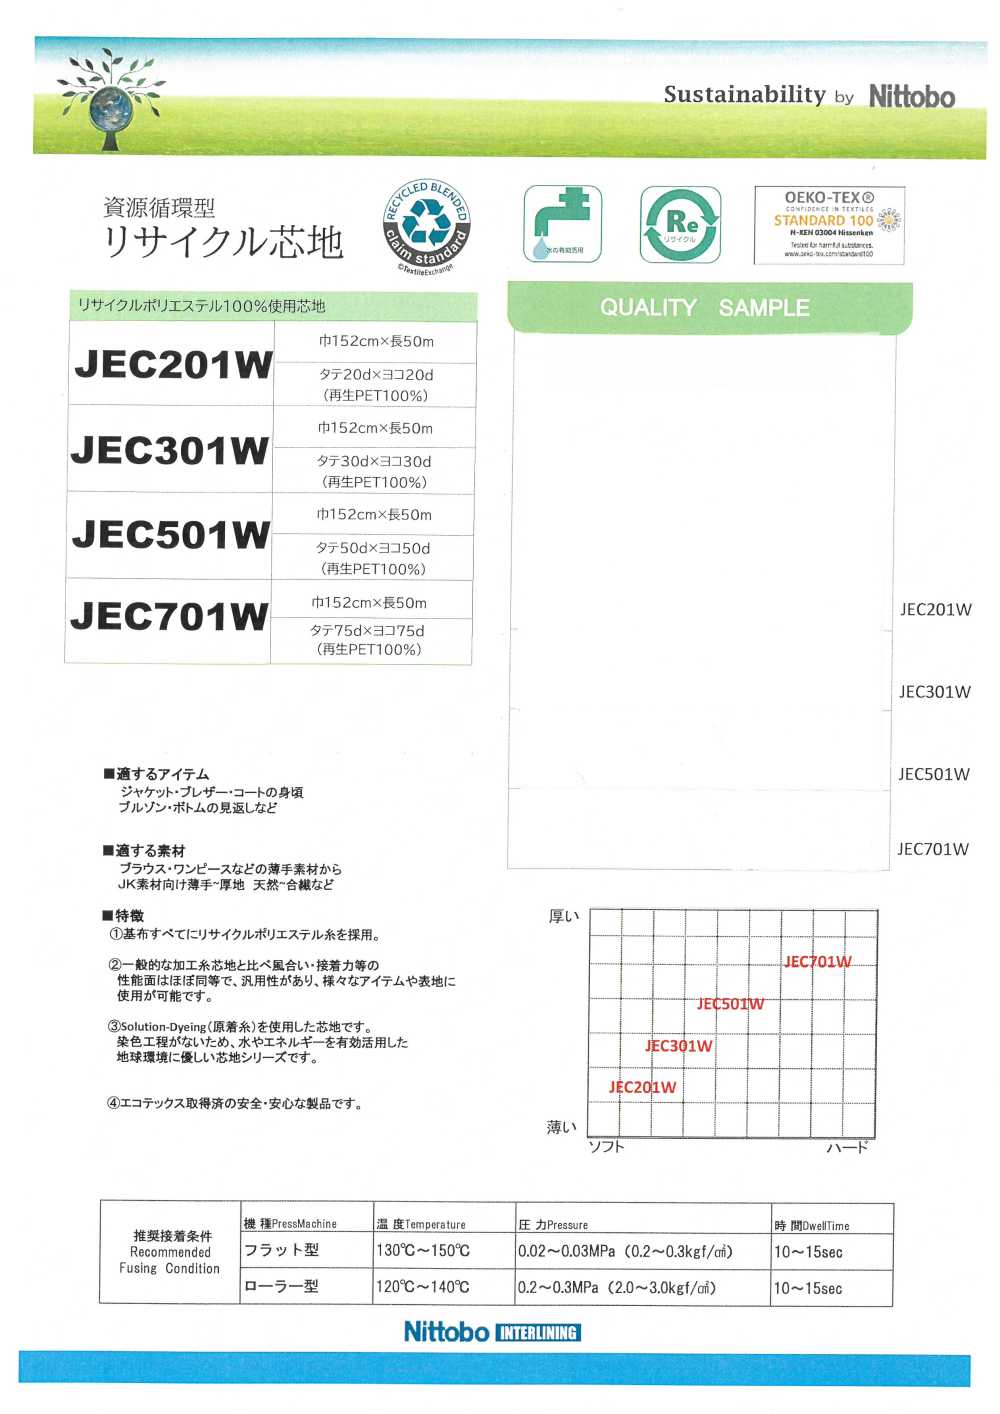 JEC301W 薄型多功能柔軟襯布 30D 使用再生材料 日東紡績